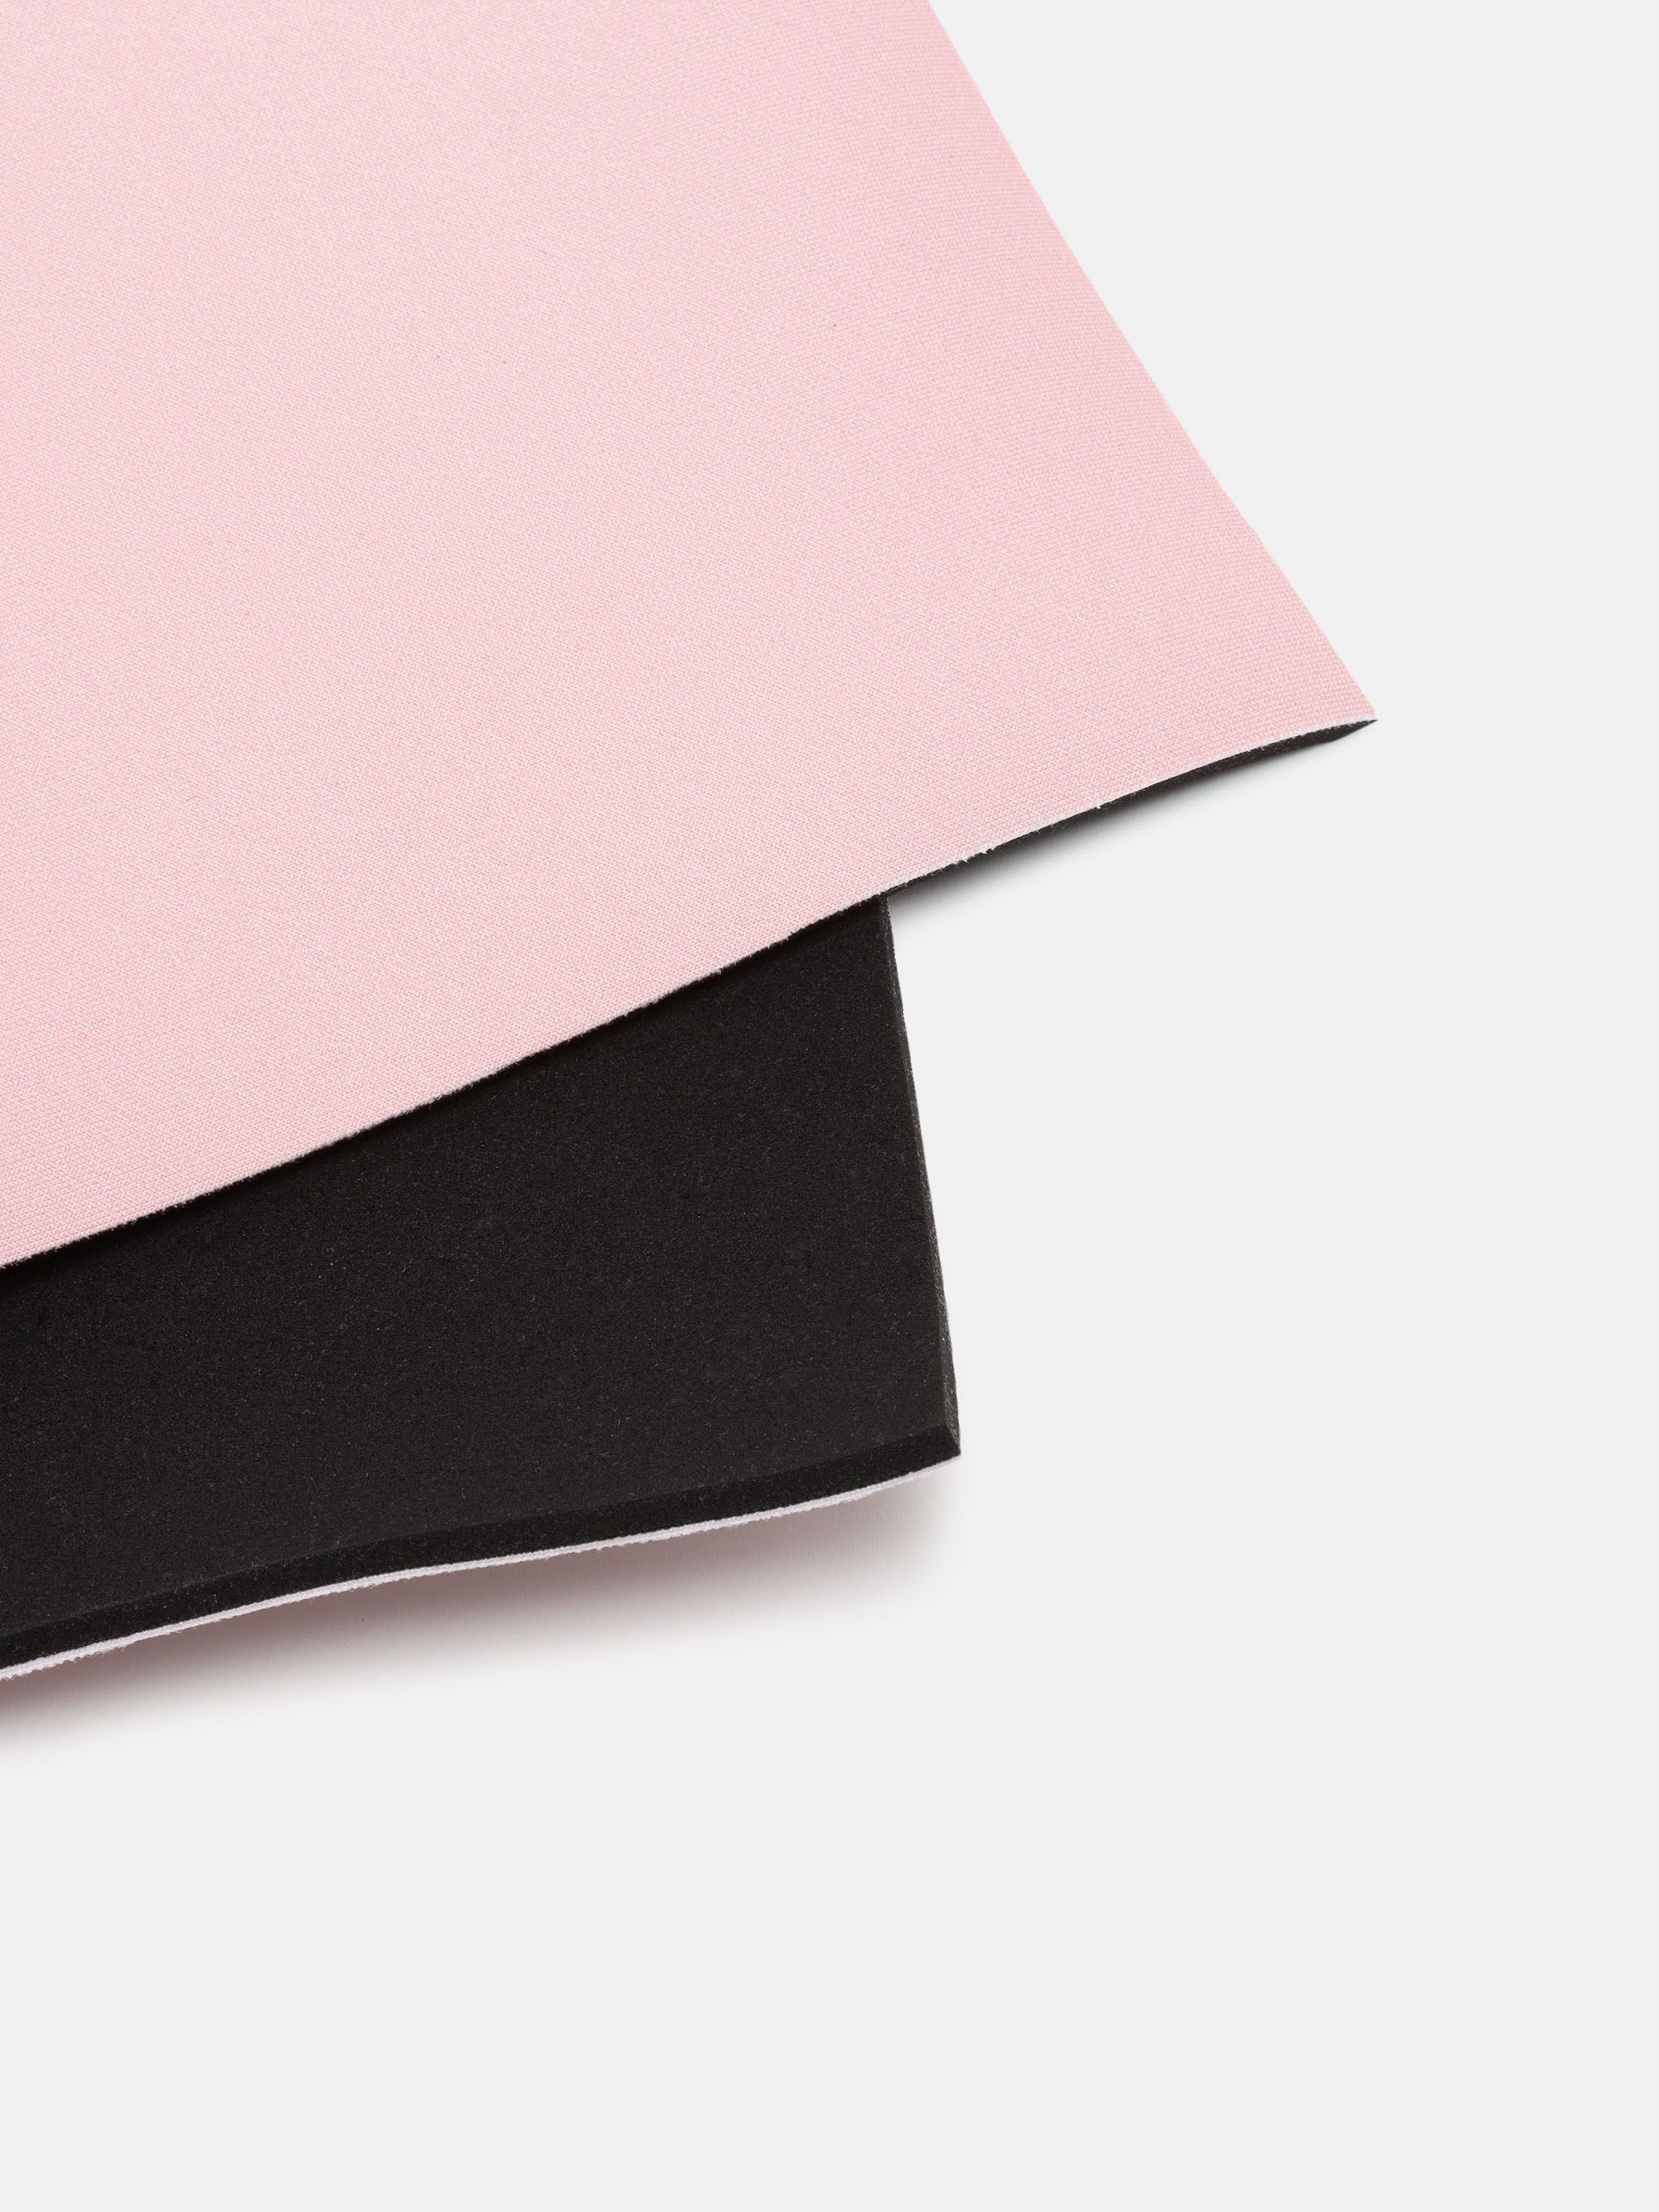 Desk pad with Artist print design